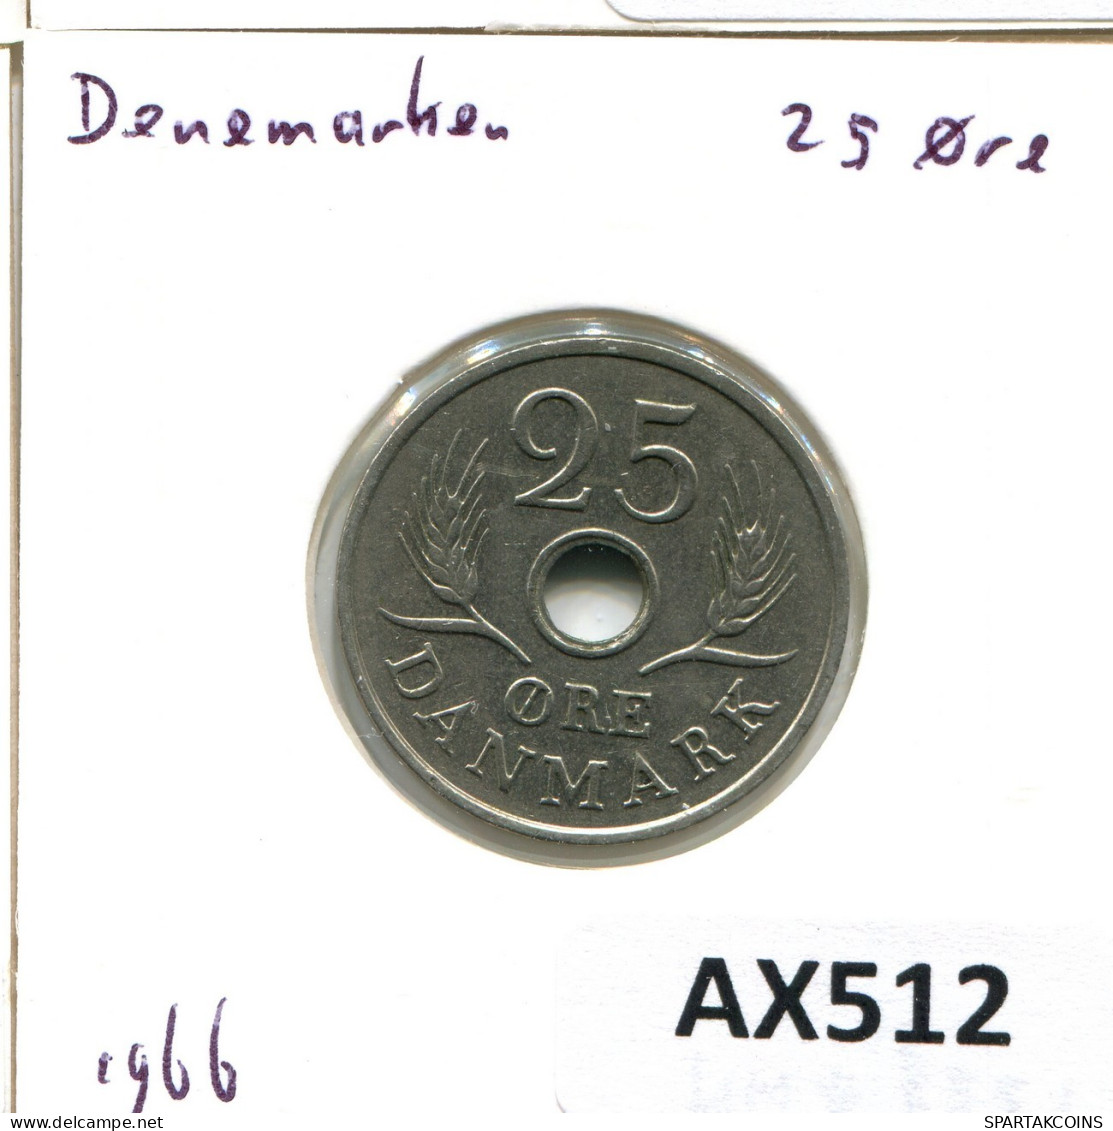 25 ORE 1966 DANEMARK DENMARK Münze Frederik IX #AX512.D.A - Denmark